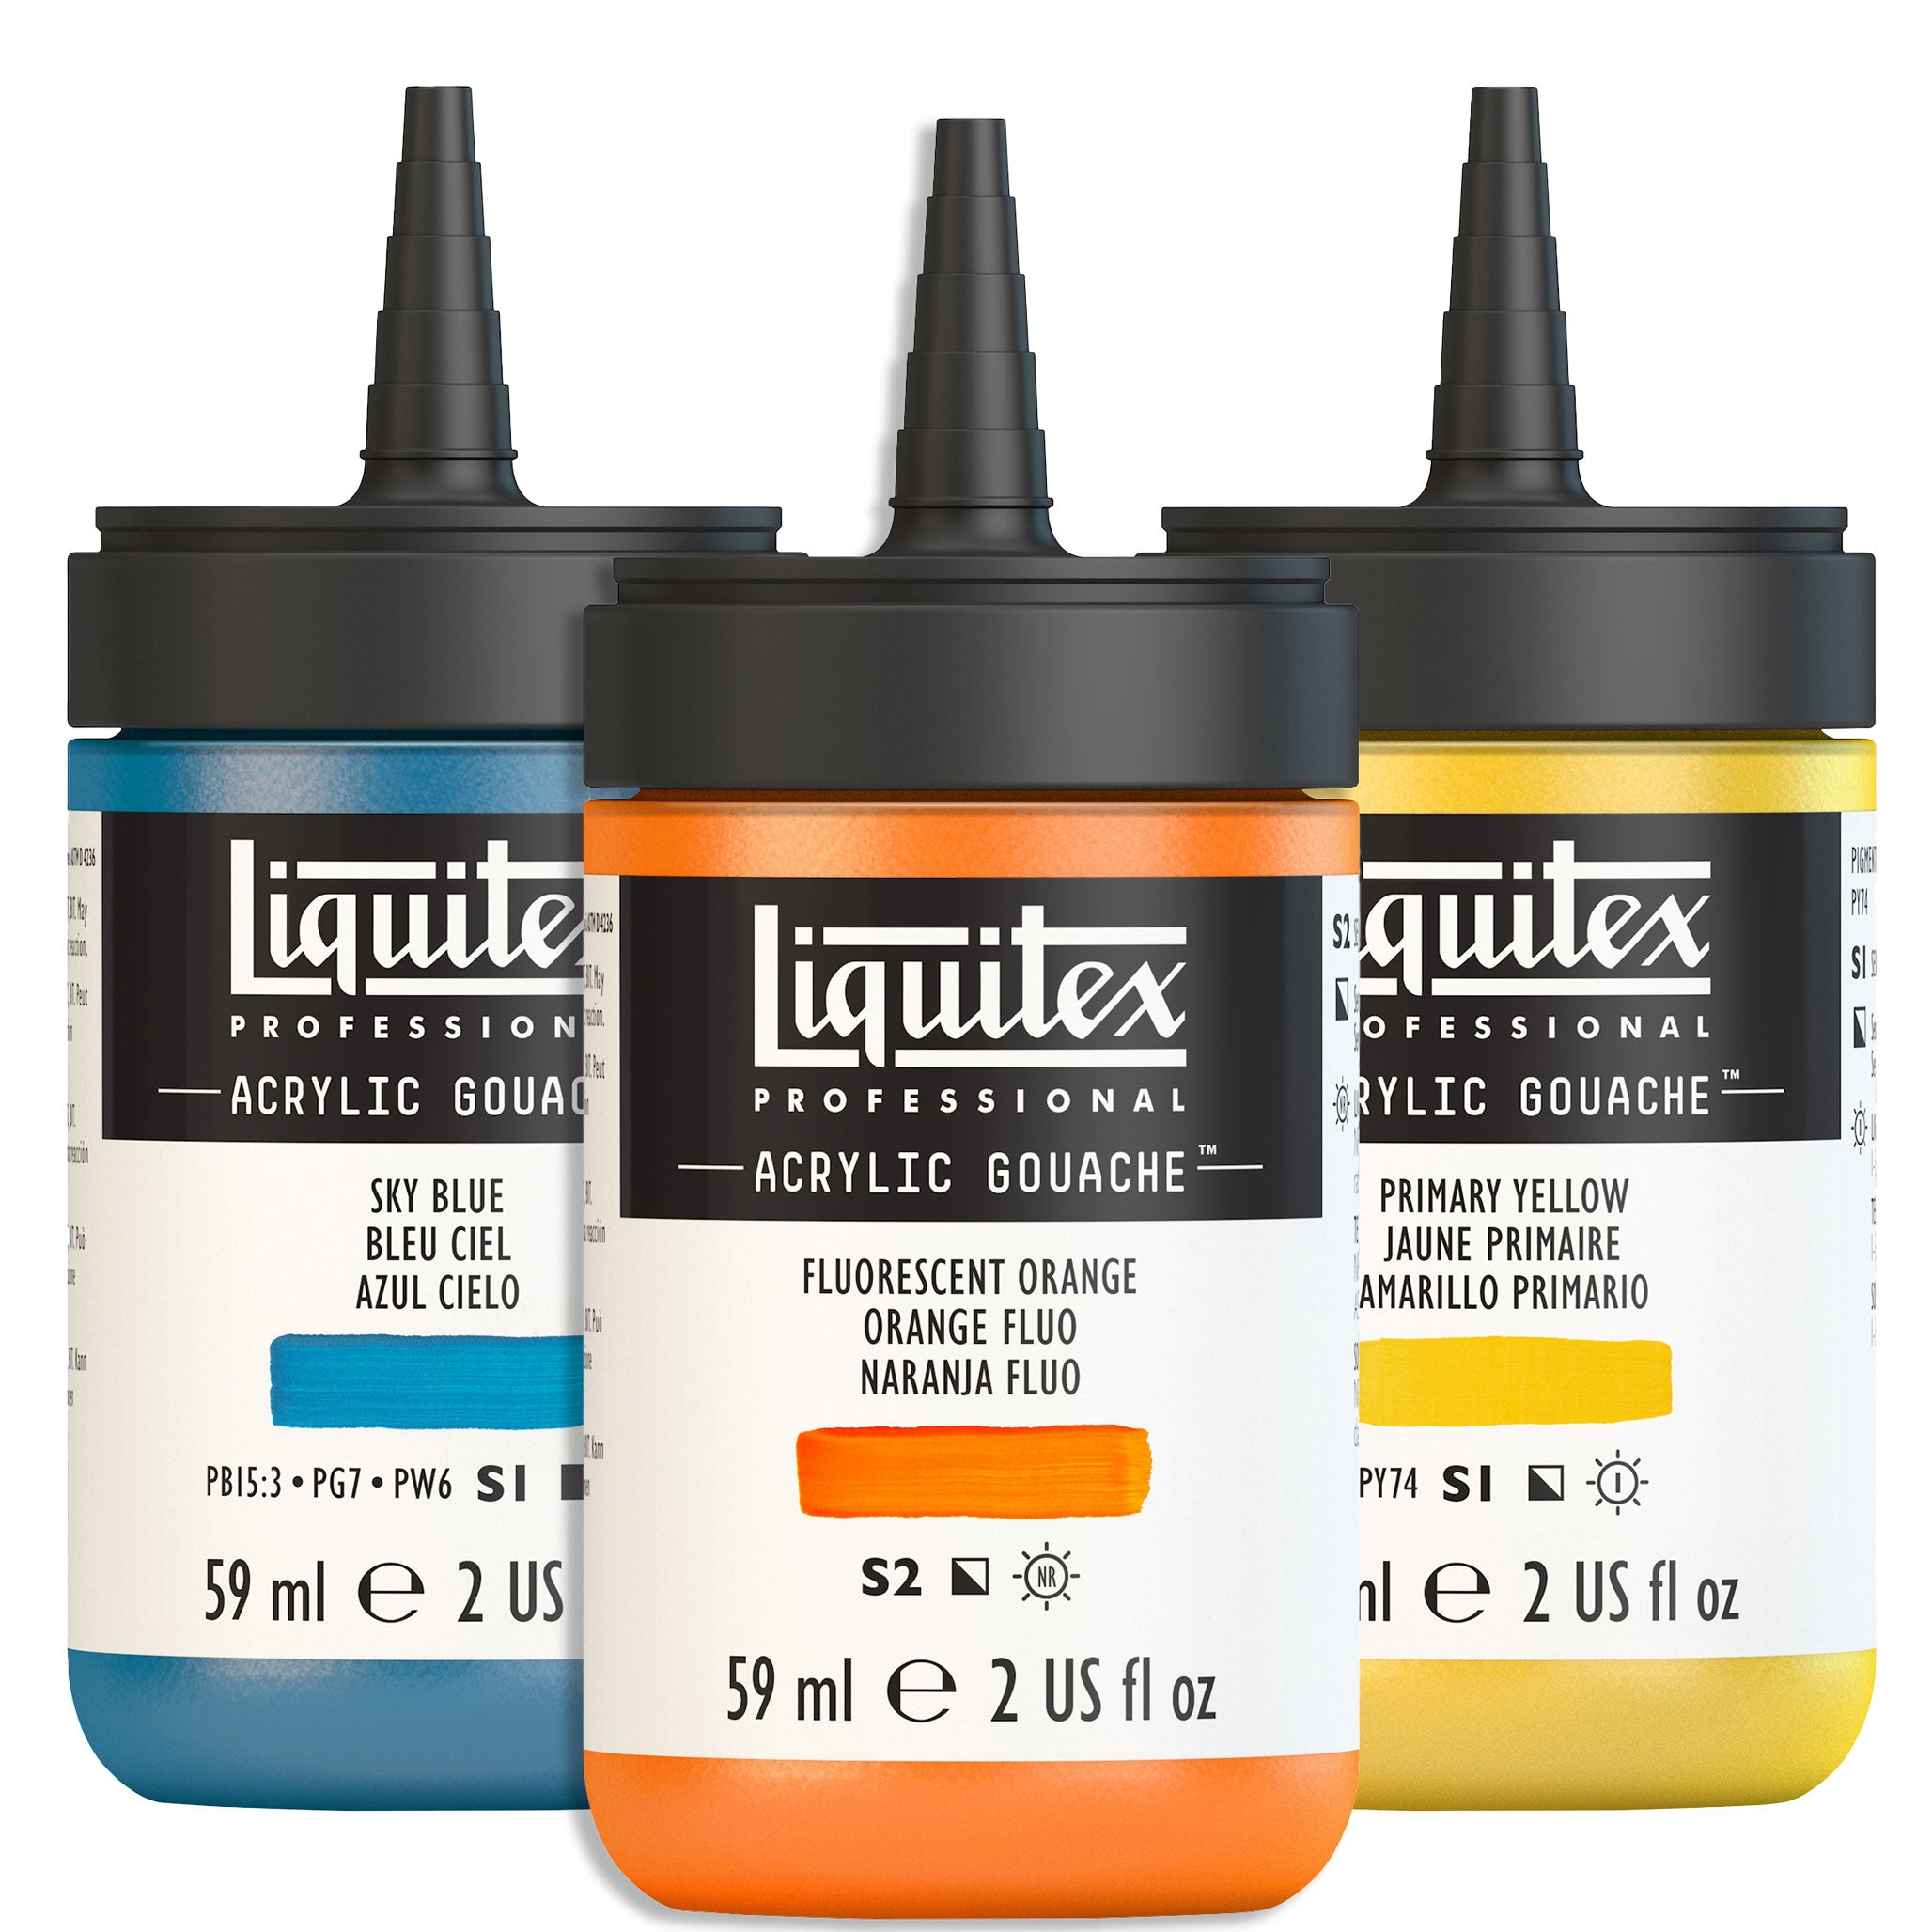 Review: Liquitex Acrylic Gouache 